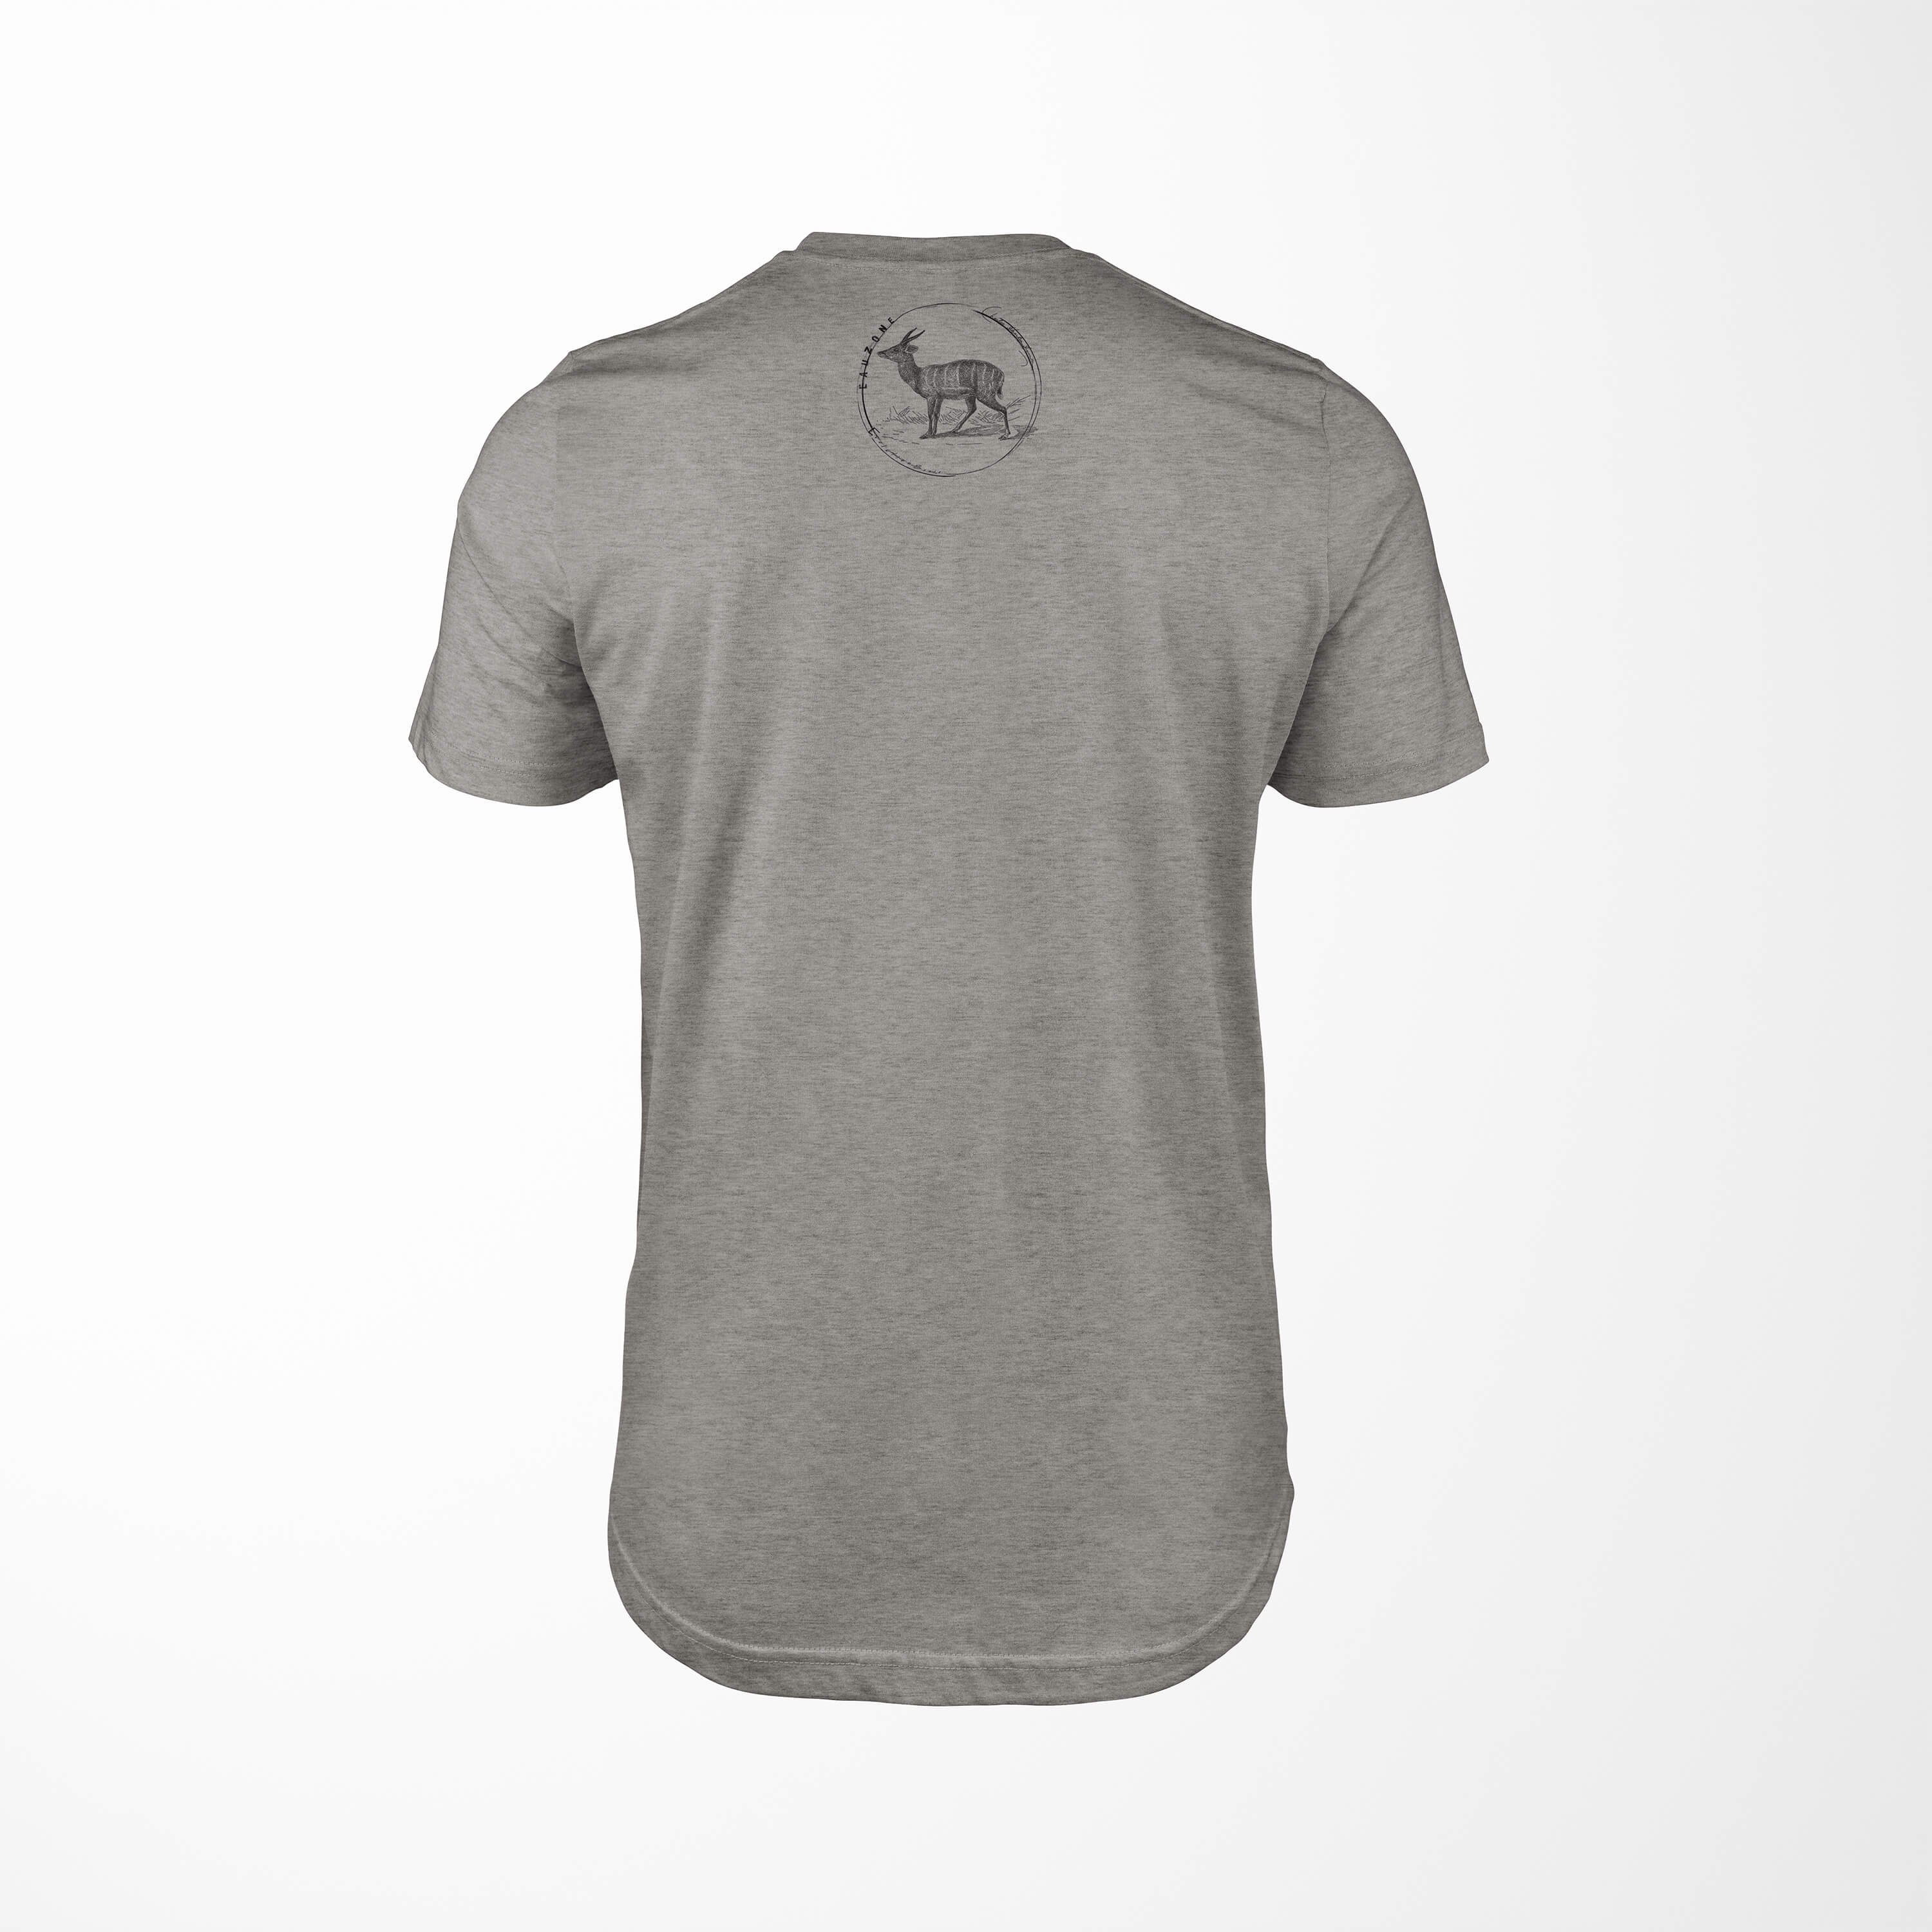 Ash Sinus Art Herren T-Shirt Evolution T-Shirt Antilope